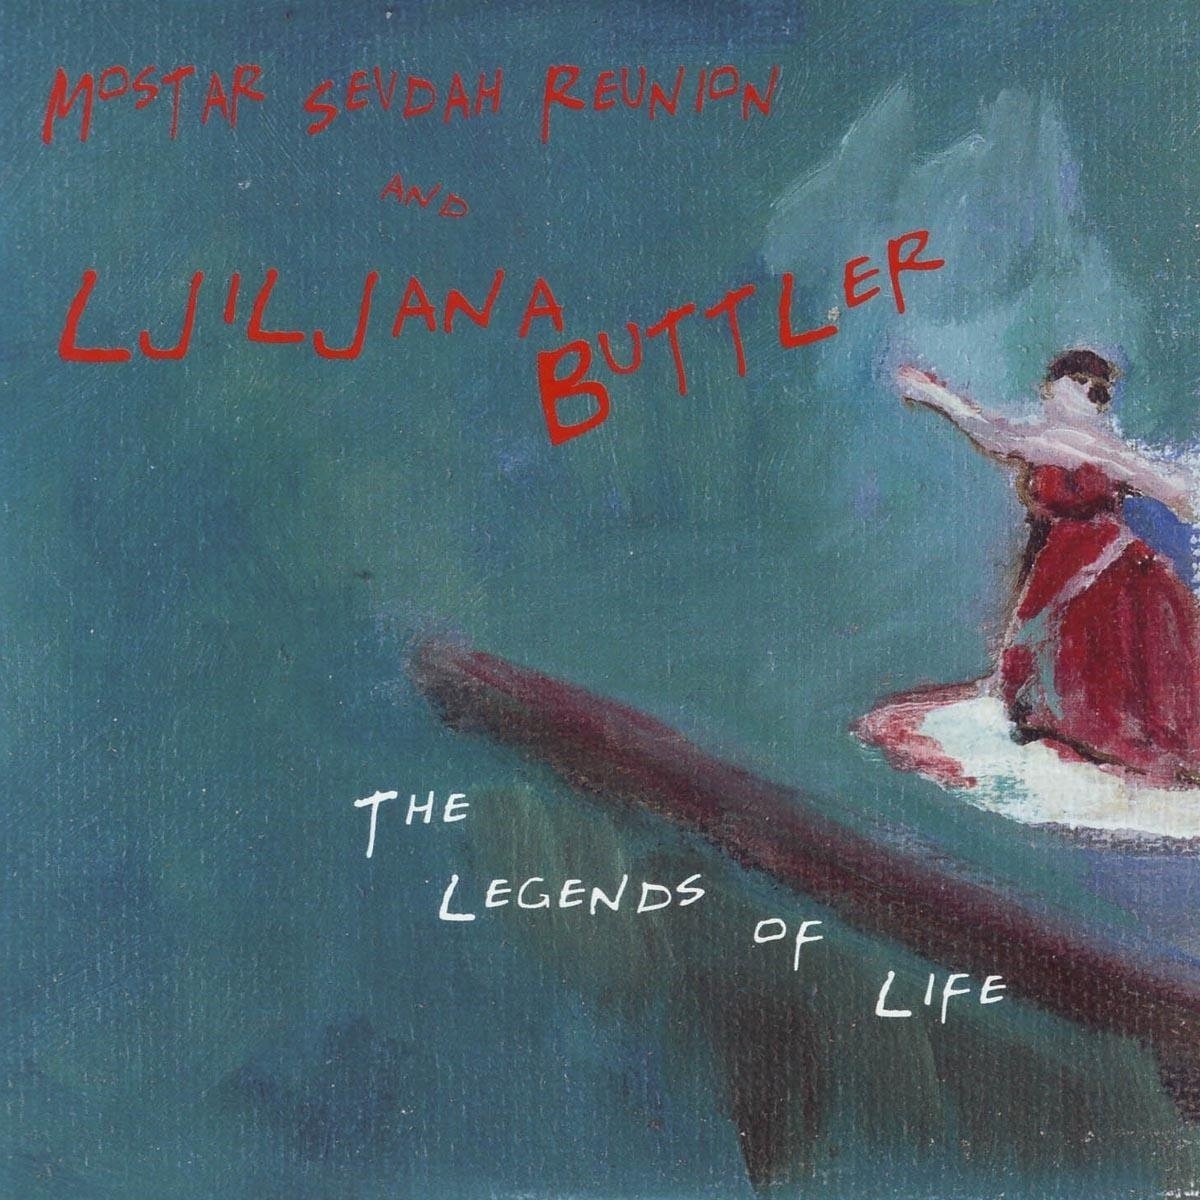 Ljiljana Buttler & Mostar Sevdah Reunion - The Legends Of Life (CD) - Ljiljana Buttler & Mostar Sevdah Reunion